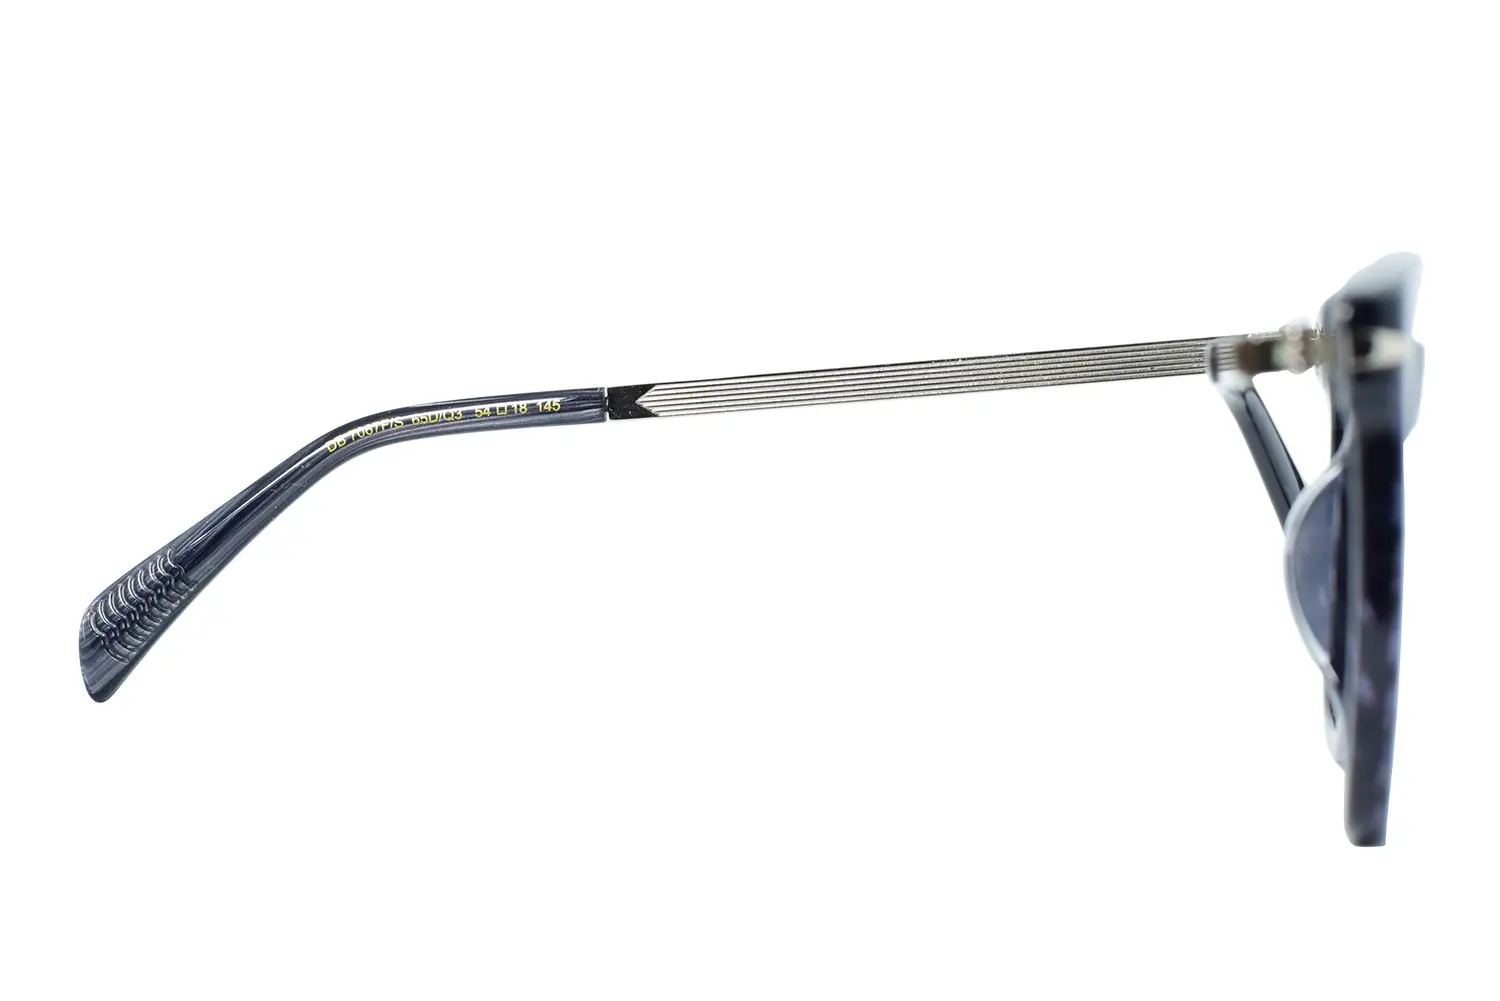 عینک طبی david beckham مدل db7067fs - دکترعینک